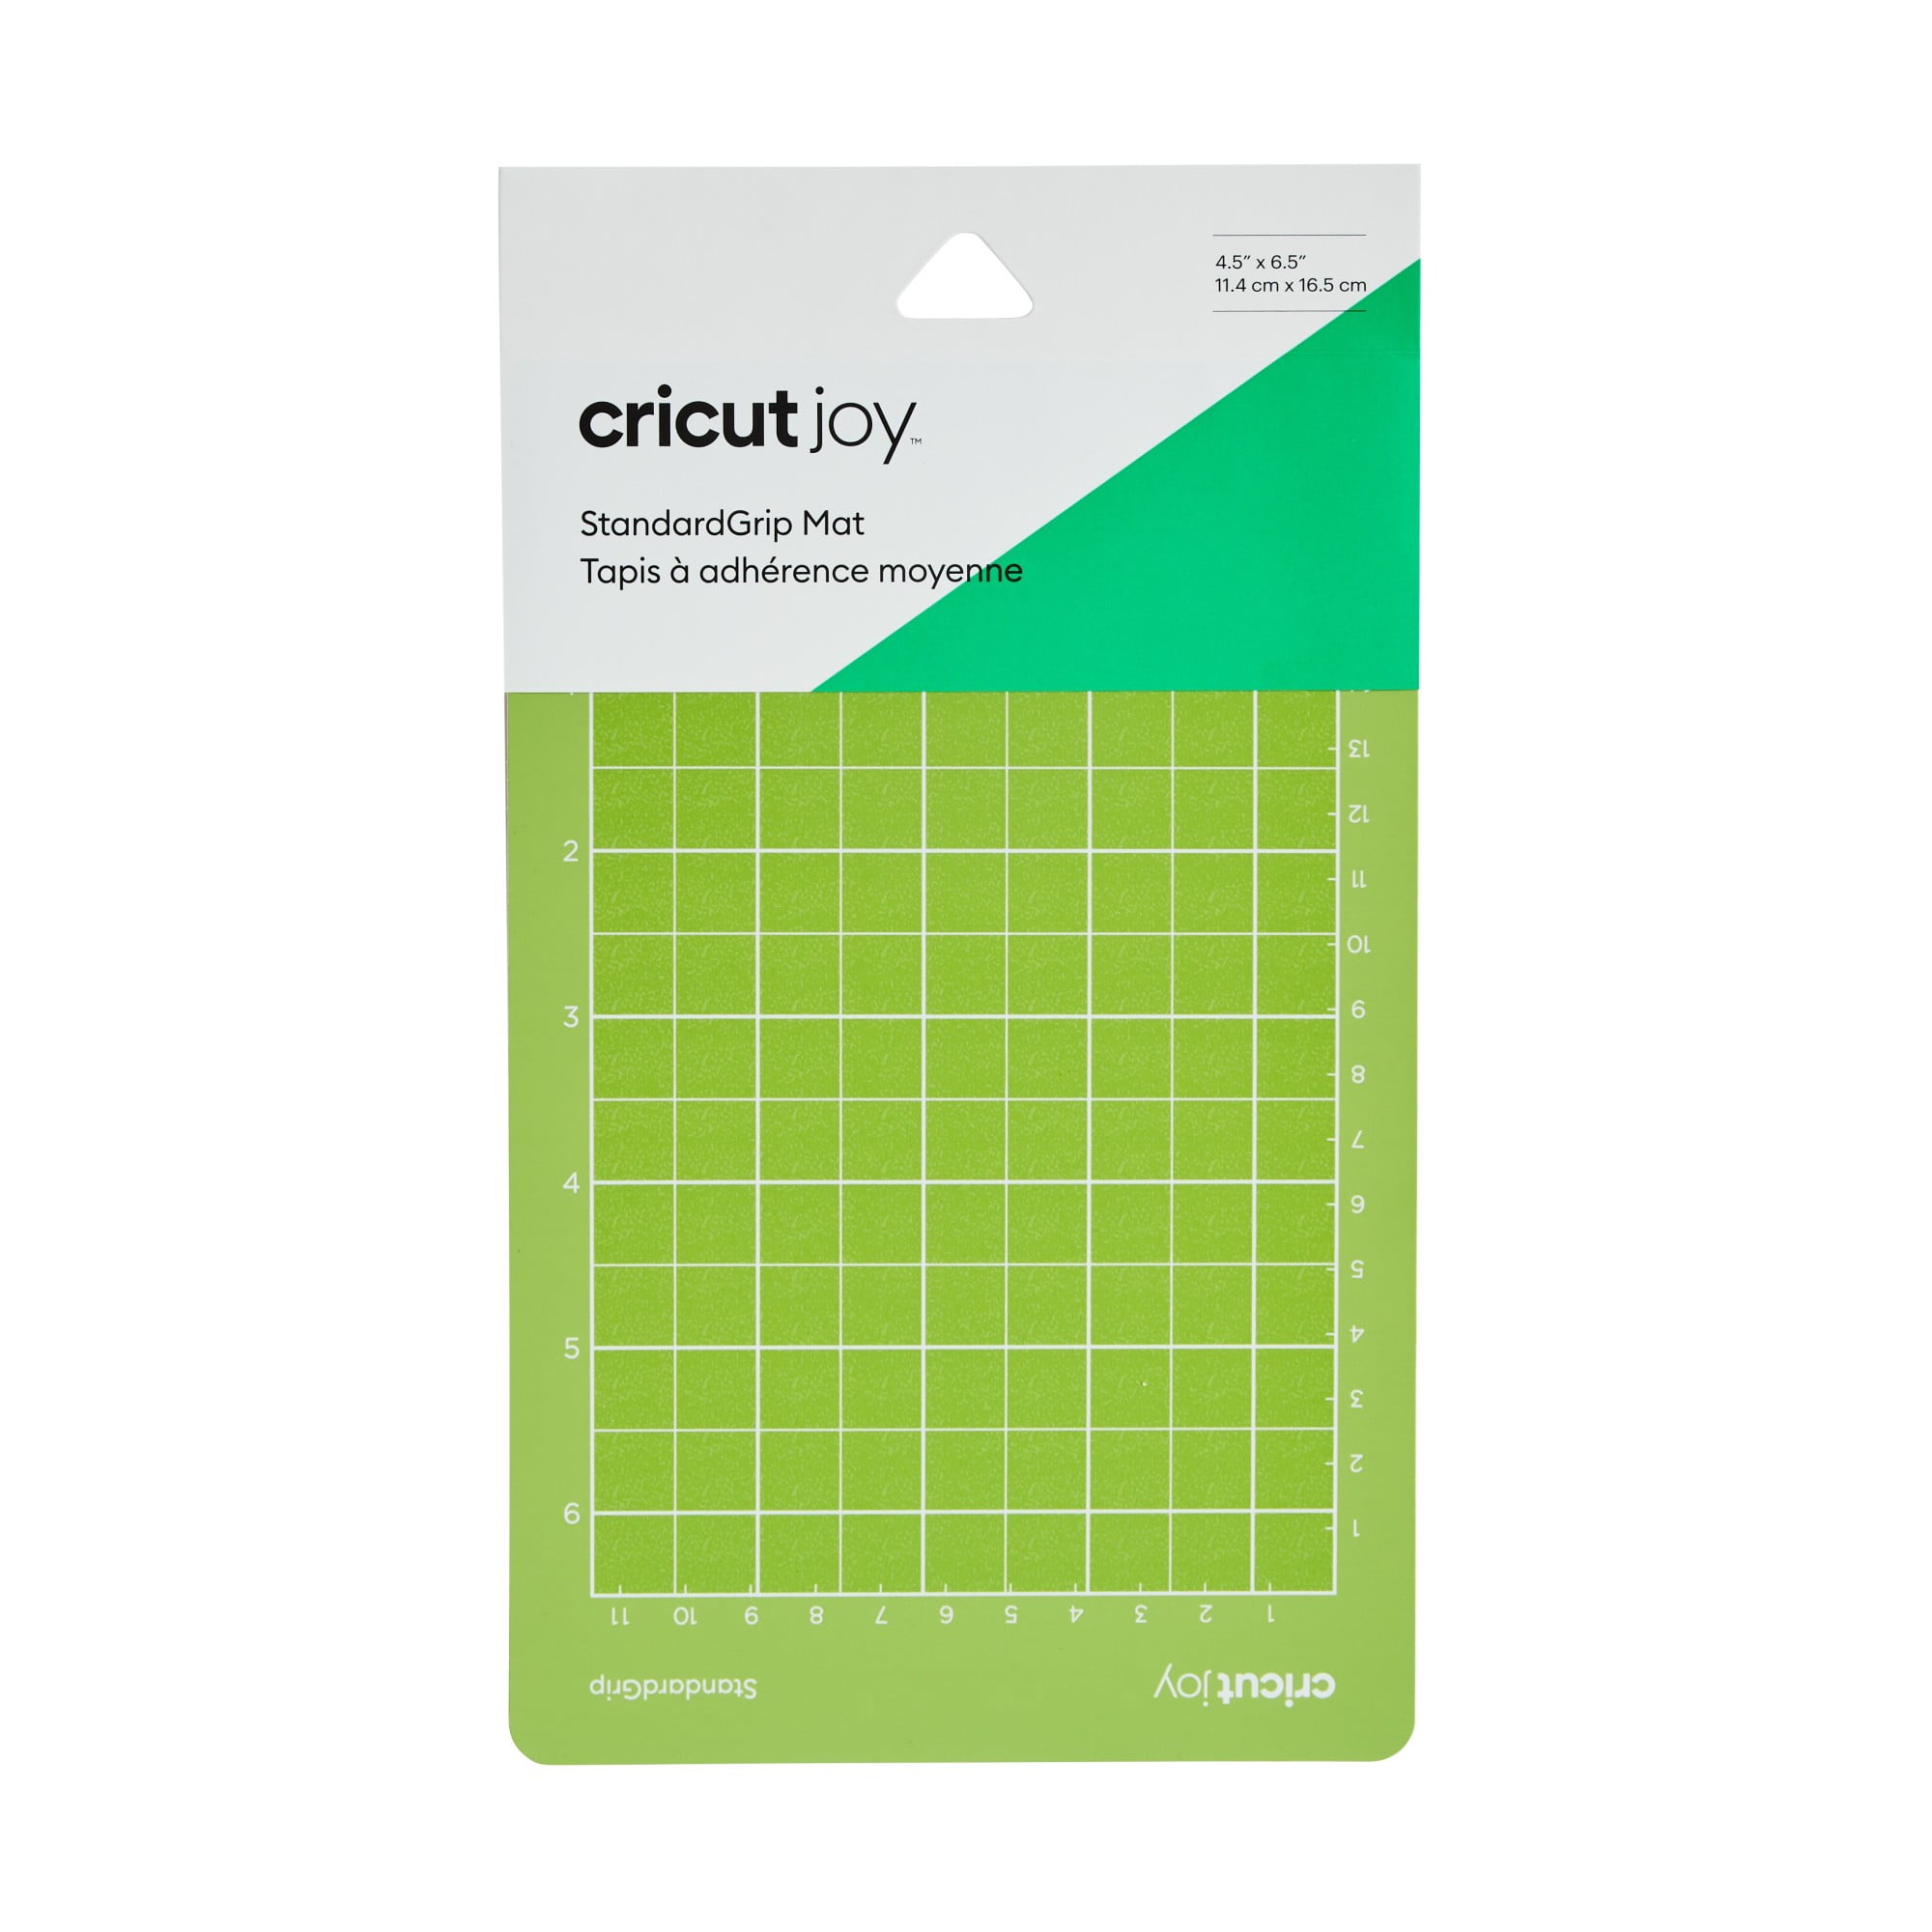  Cricut Variety Pack(1 StrongGrip, 1 LightGrip, 1